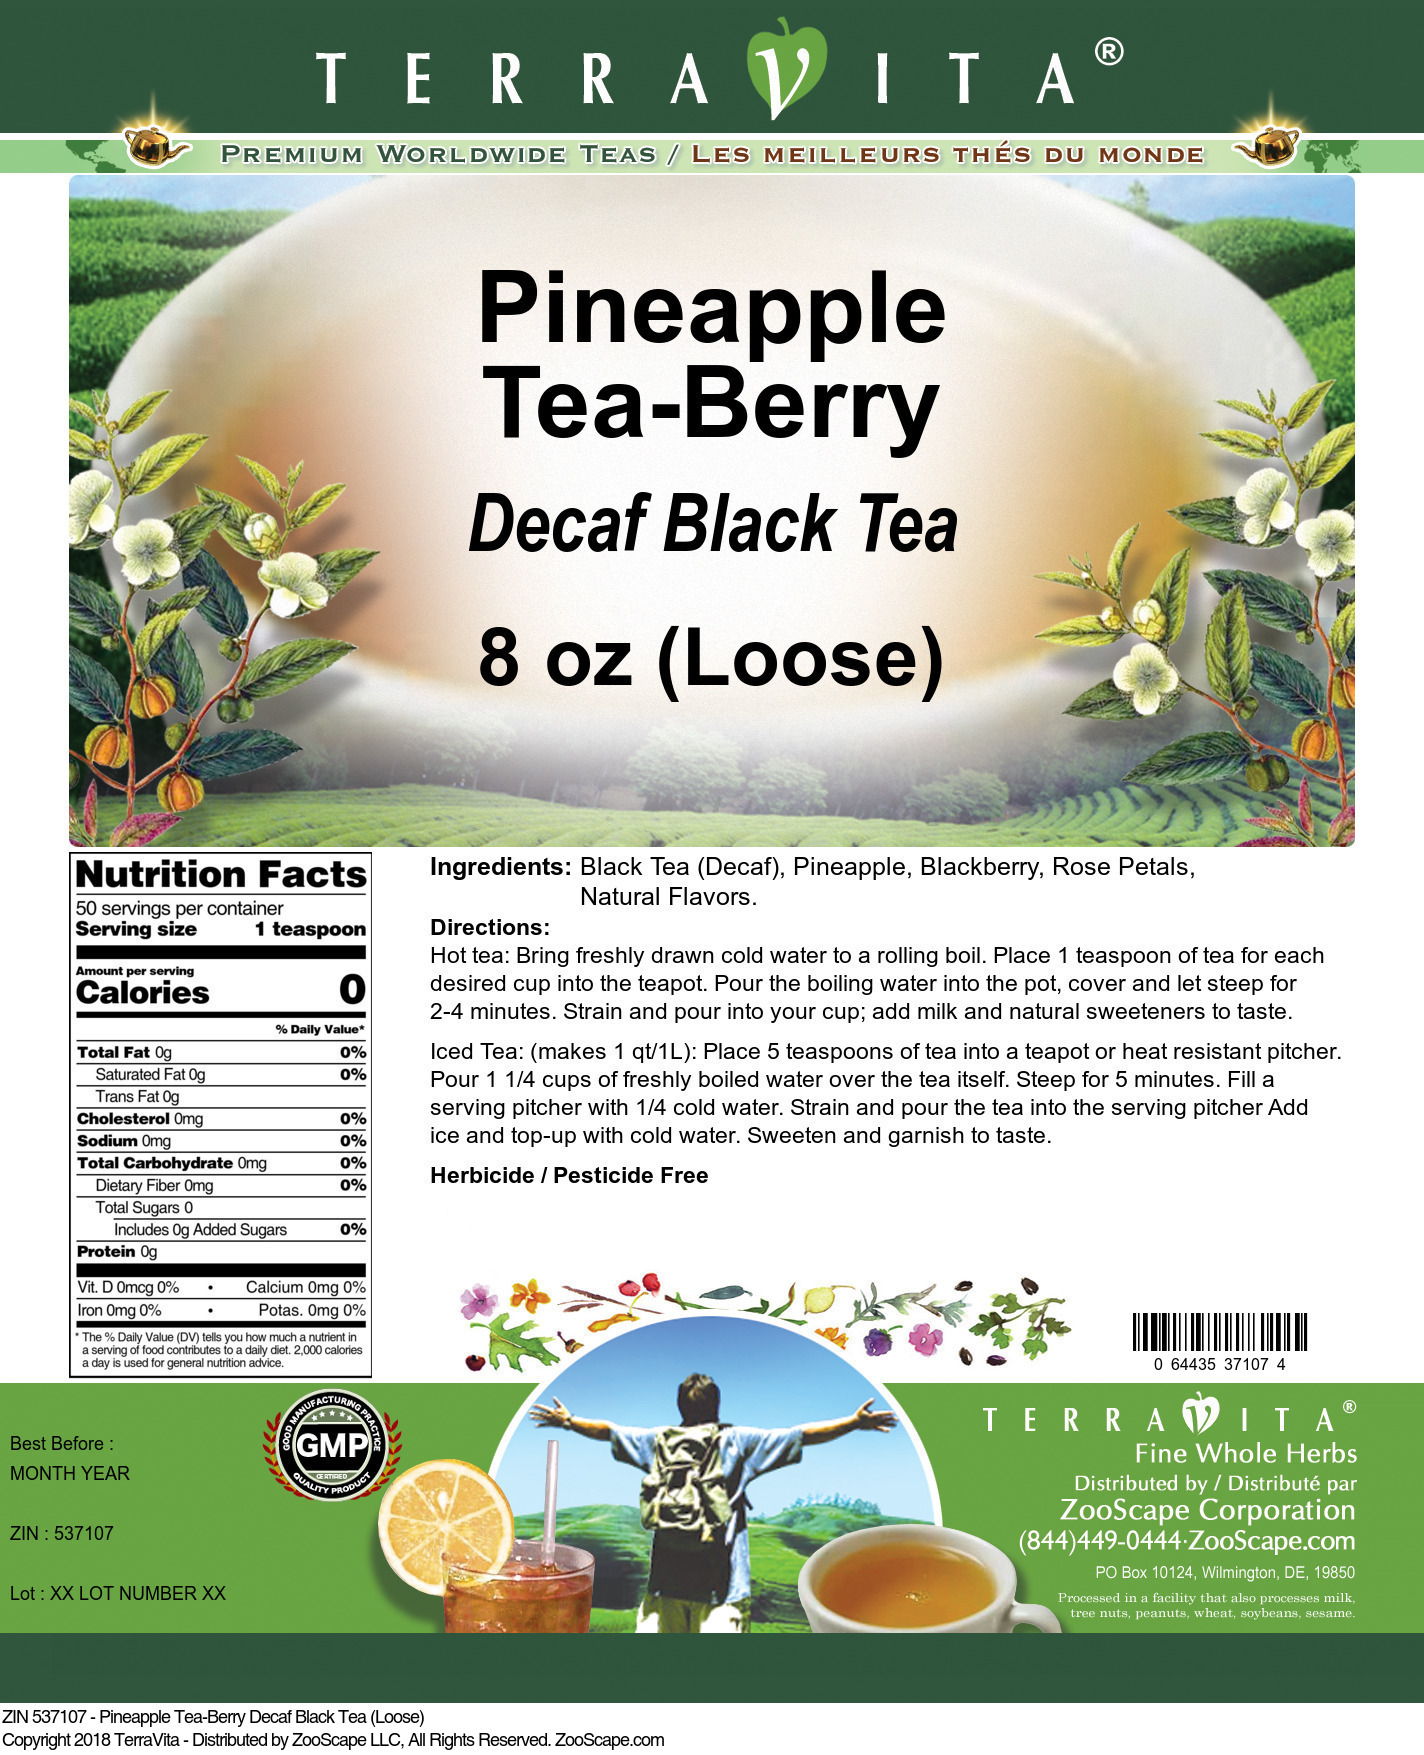 Pineapple Tea-Berry Decaf Black Tea (Loose) - Label